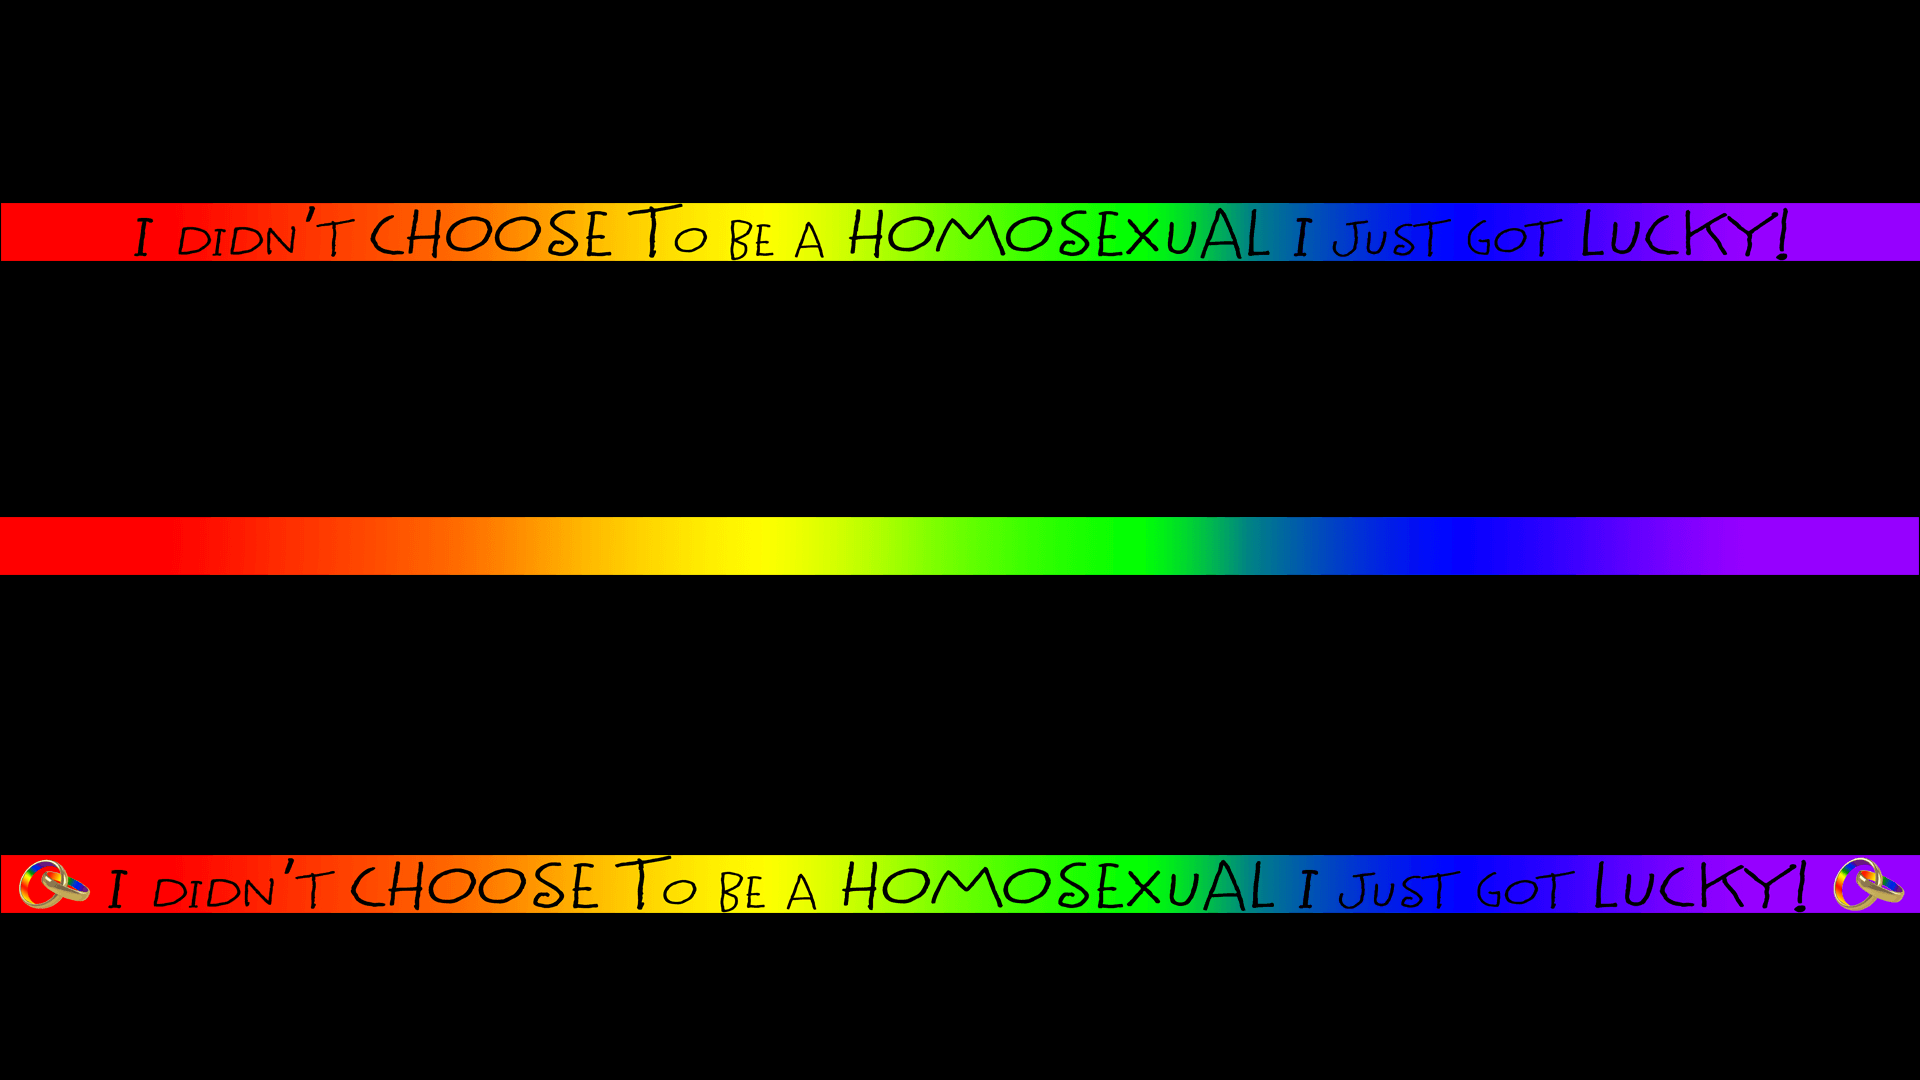 hidden gay pride flag wallpaper